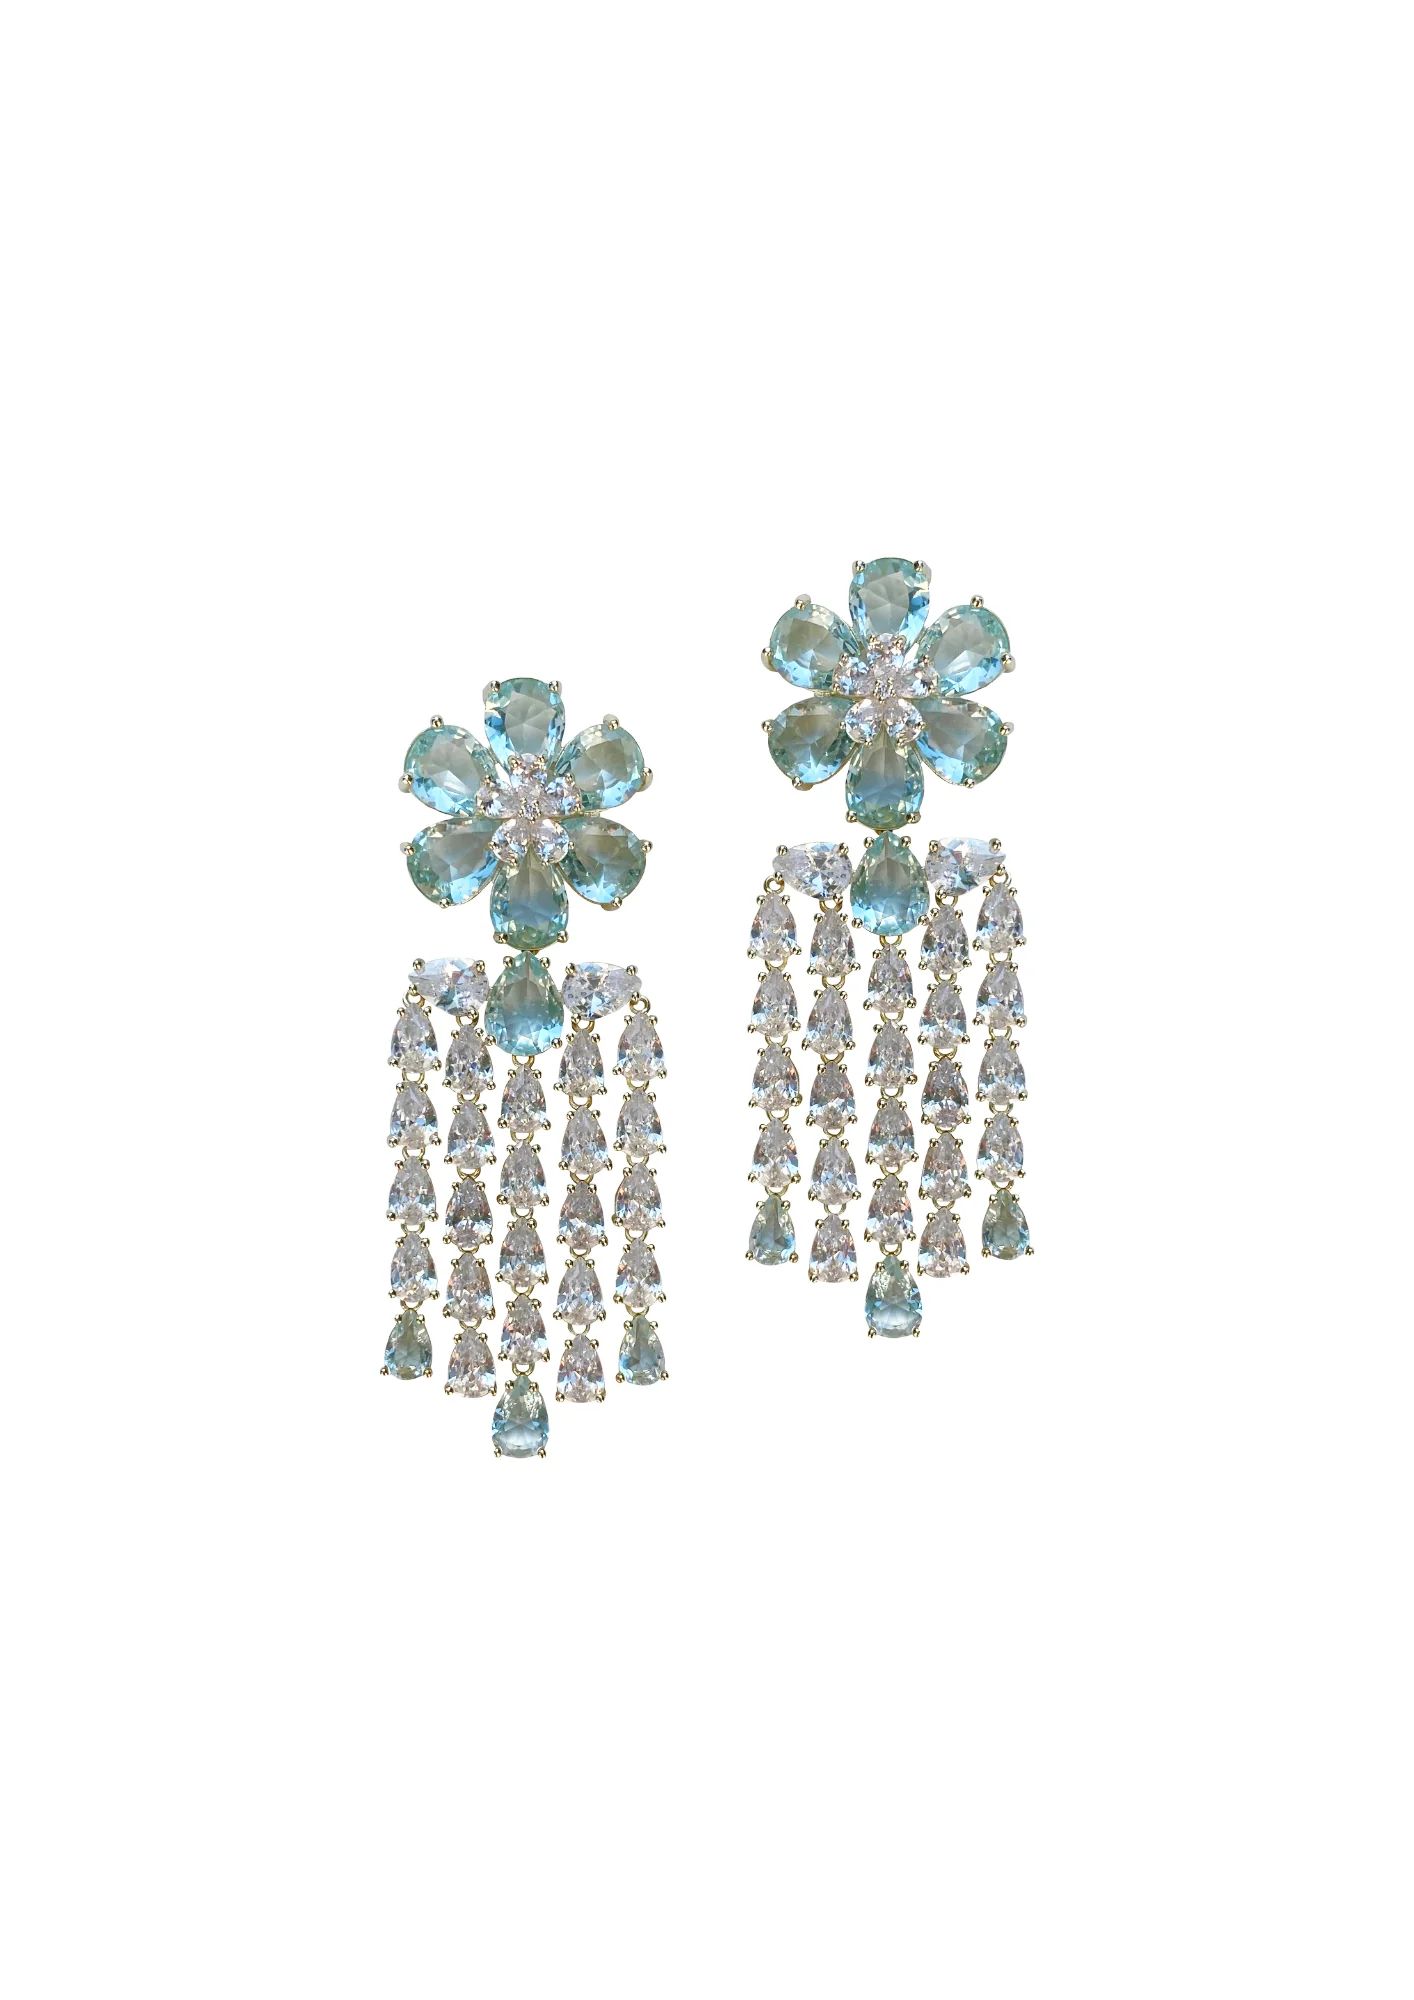 Paris Blue Flower + Embellished Tassels | Nicola Bathie Jewelry